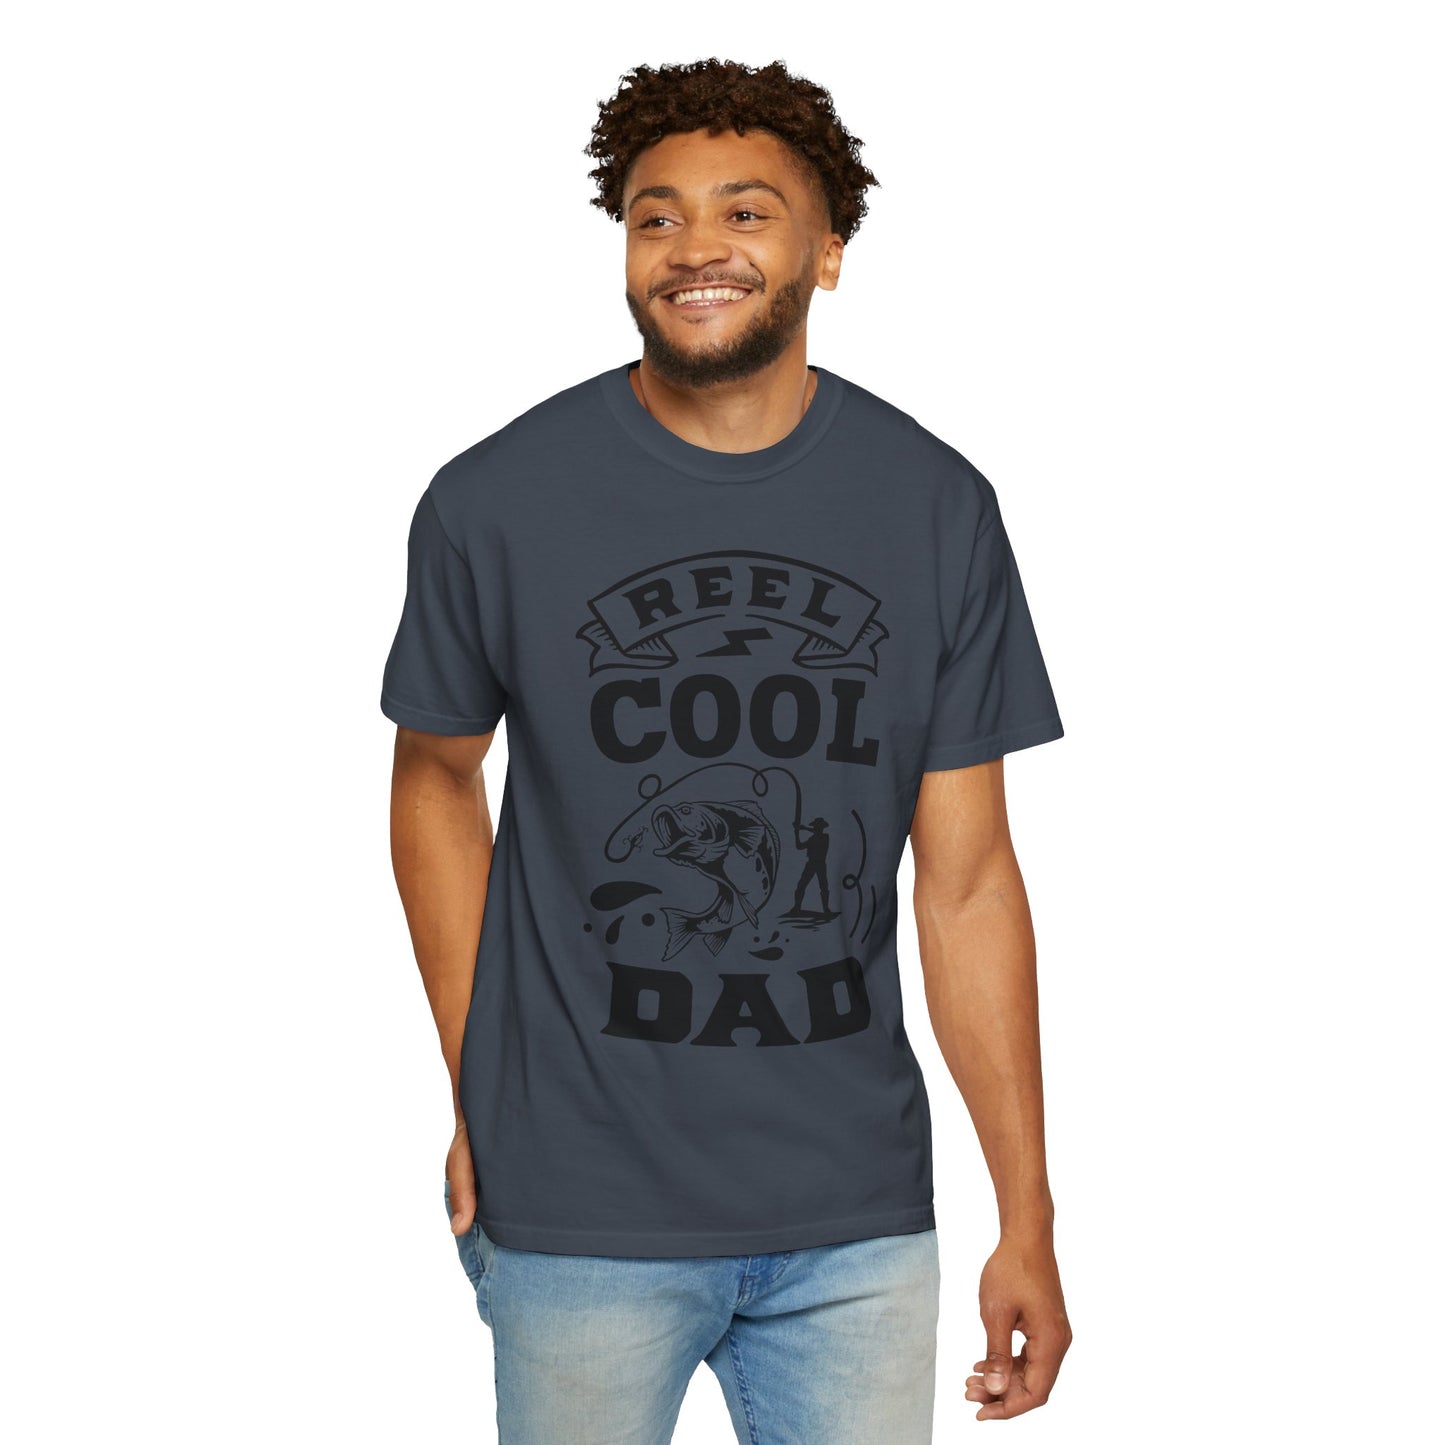 Reel cool dad: Unisex Garment-Dyed T-shirt